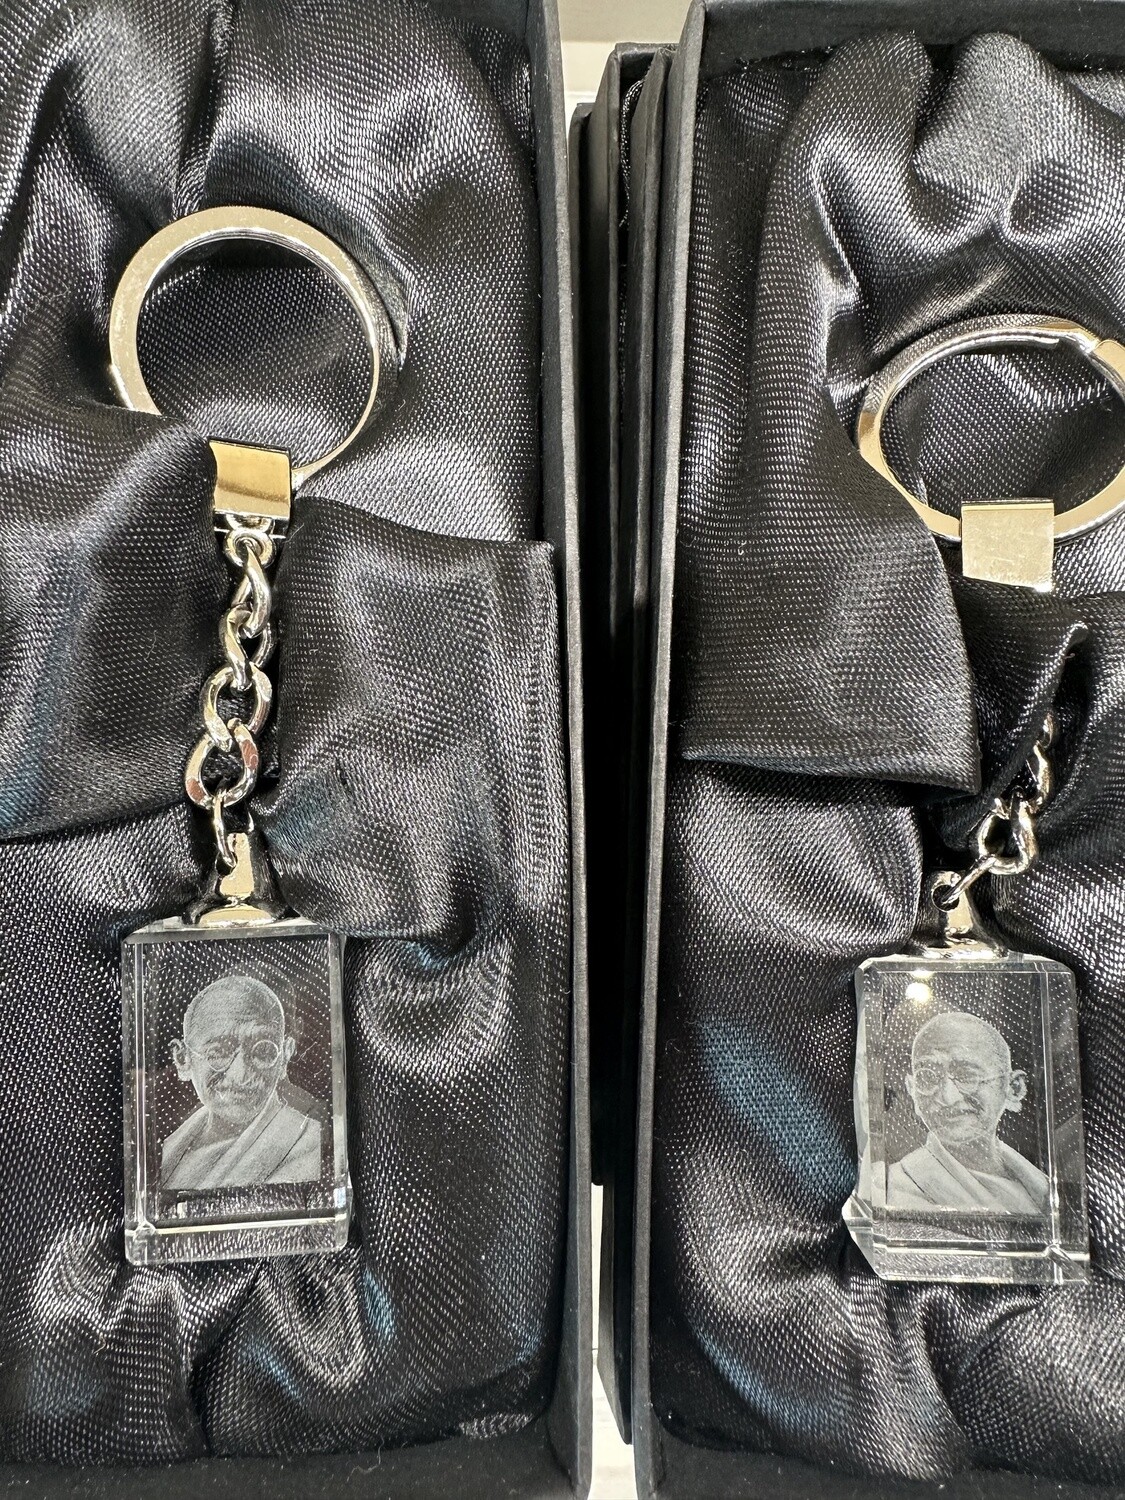 Gandhi Key Chain with Specs